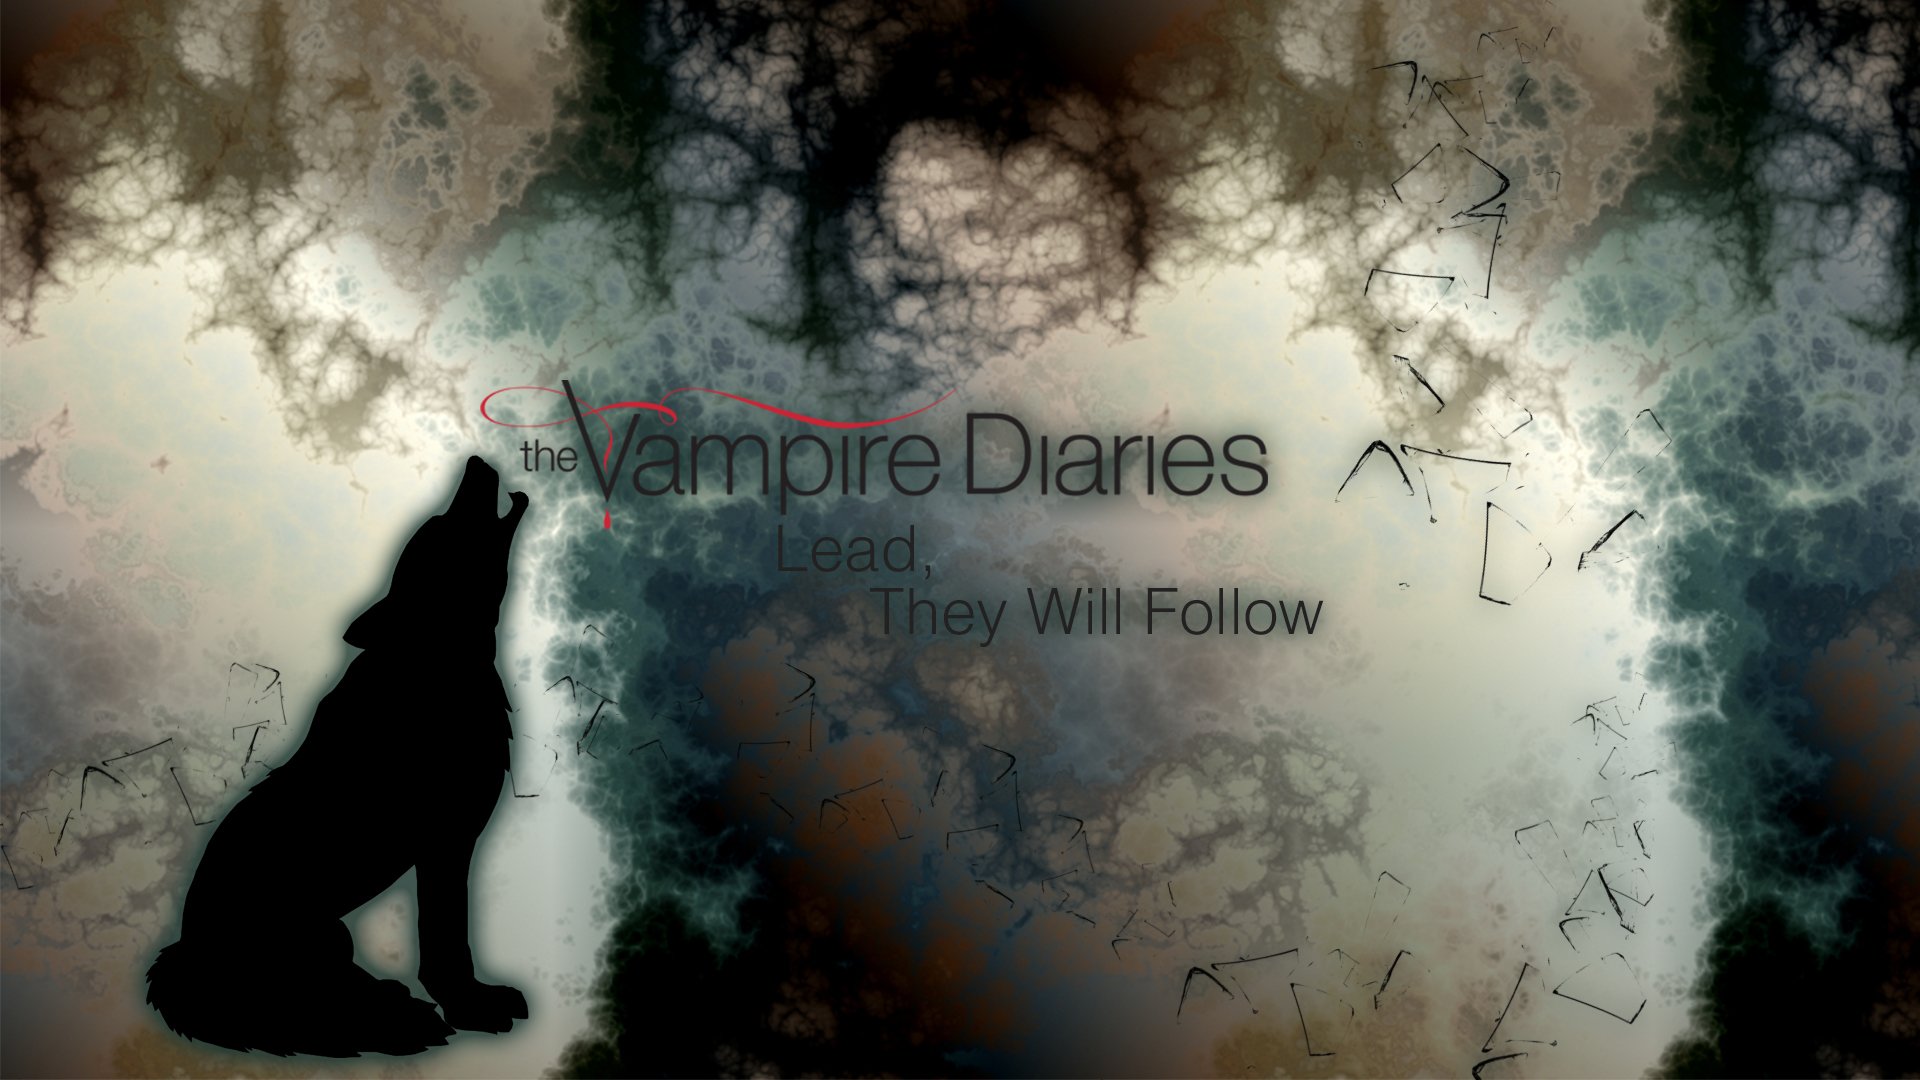 The Vampire Diaries Wallpaper Series the vampire diaries 34080148 1920